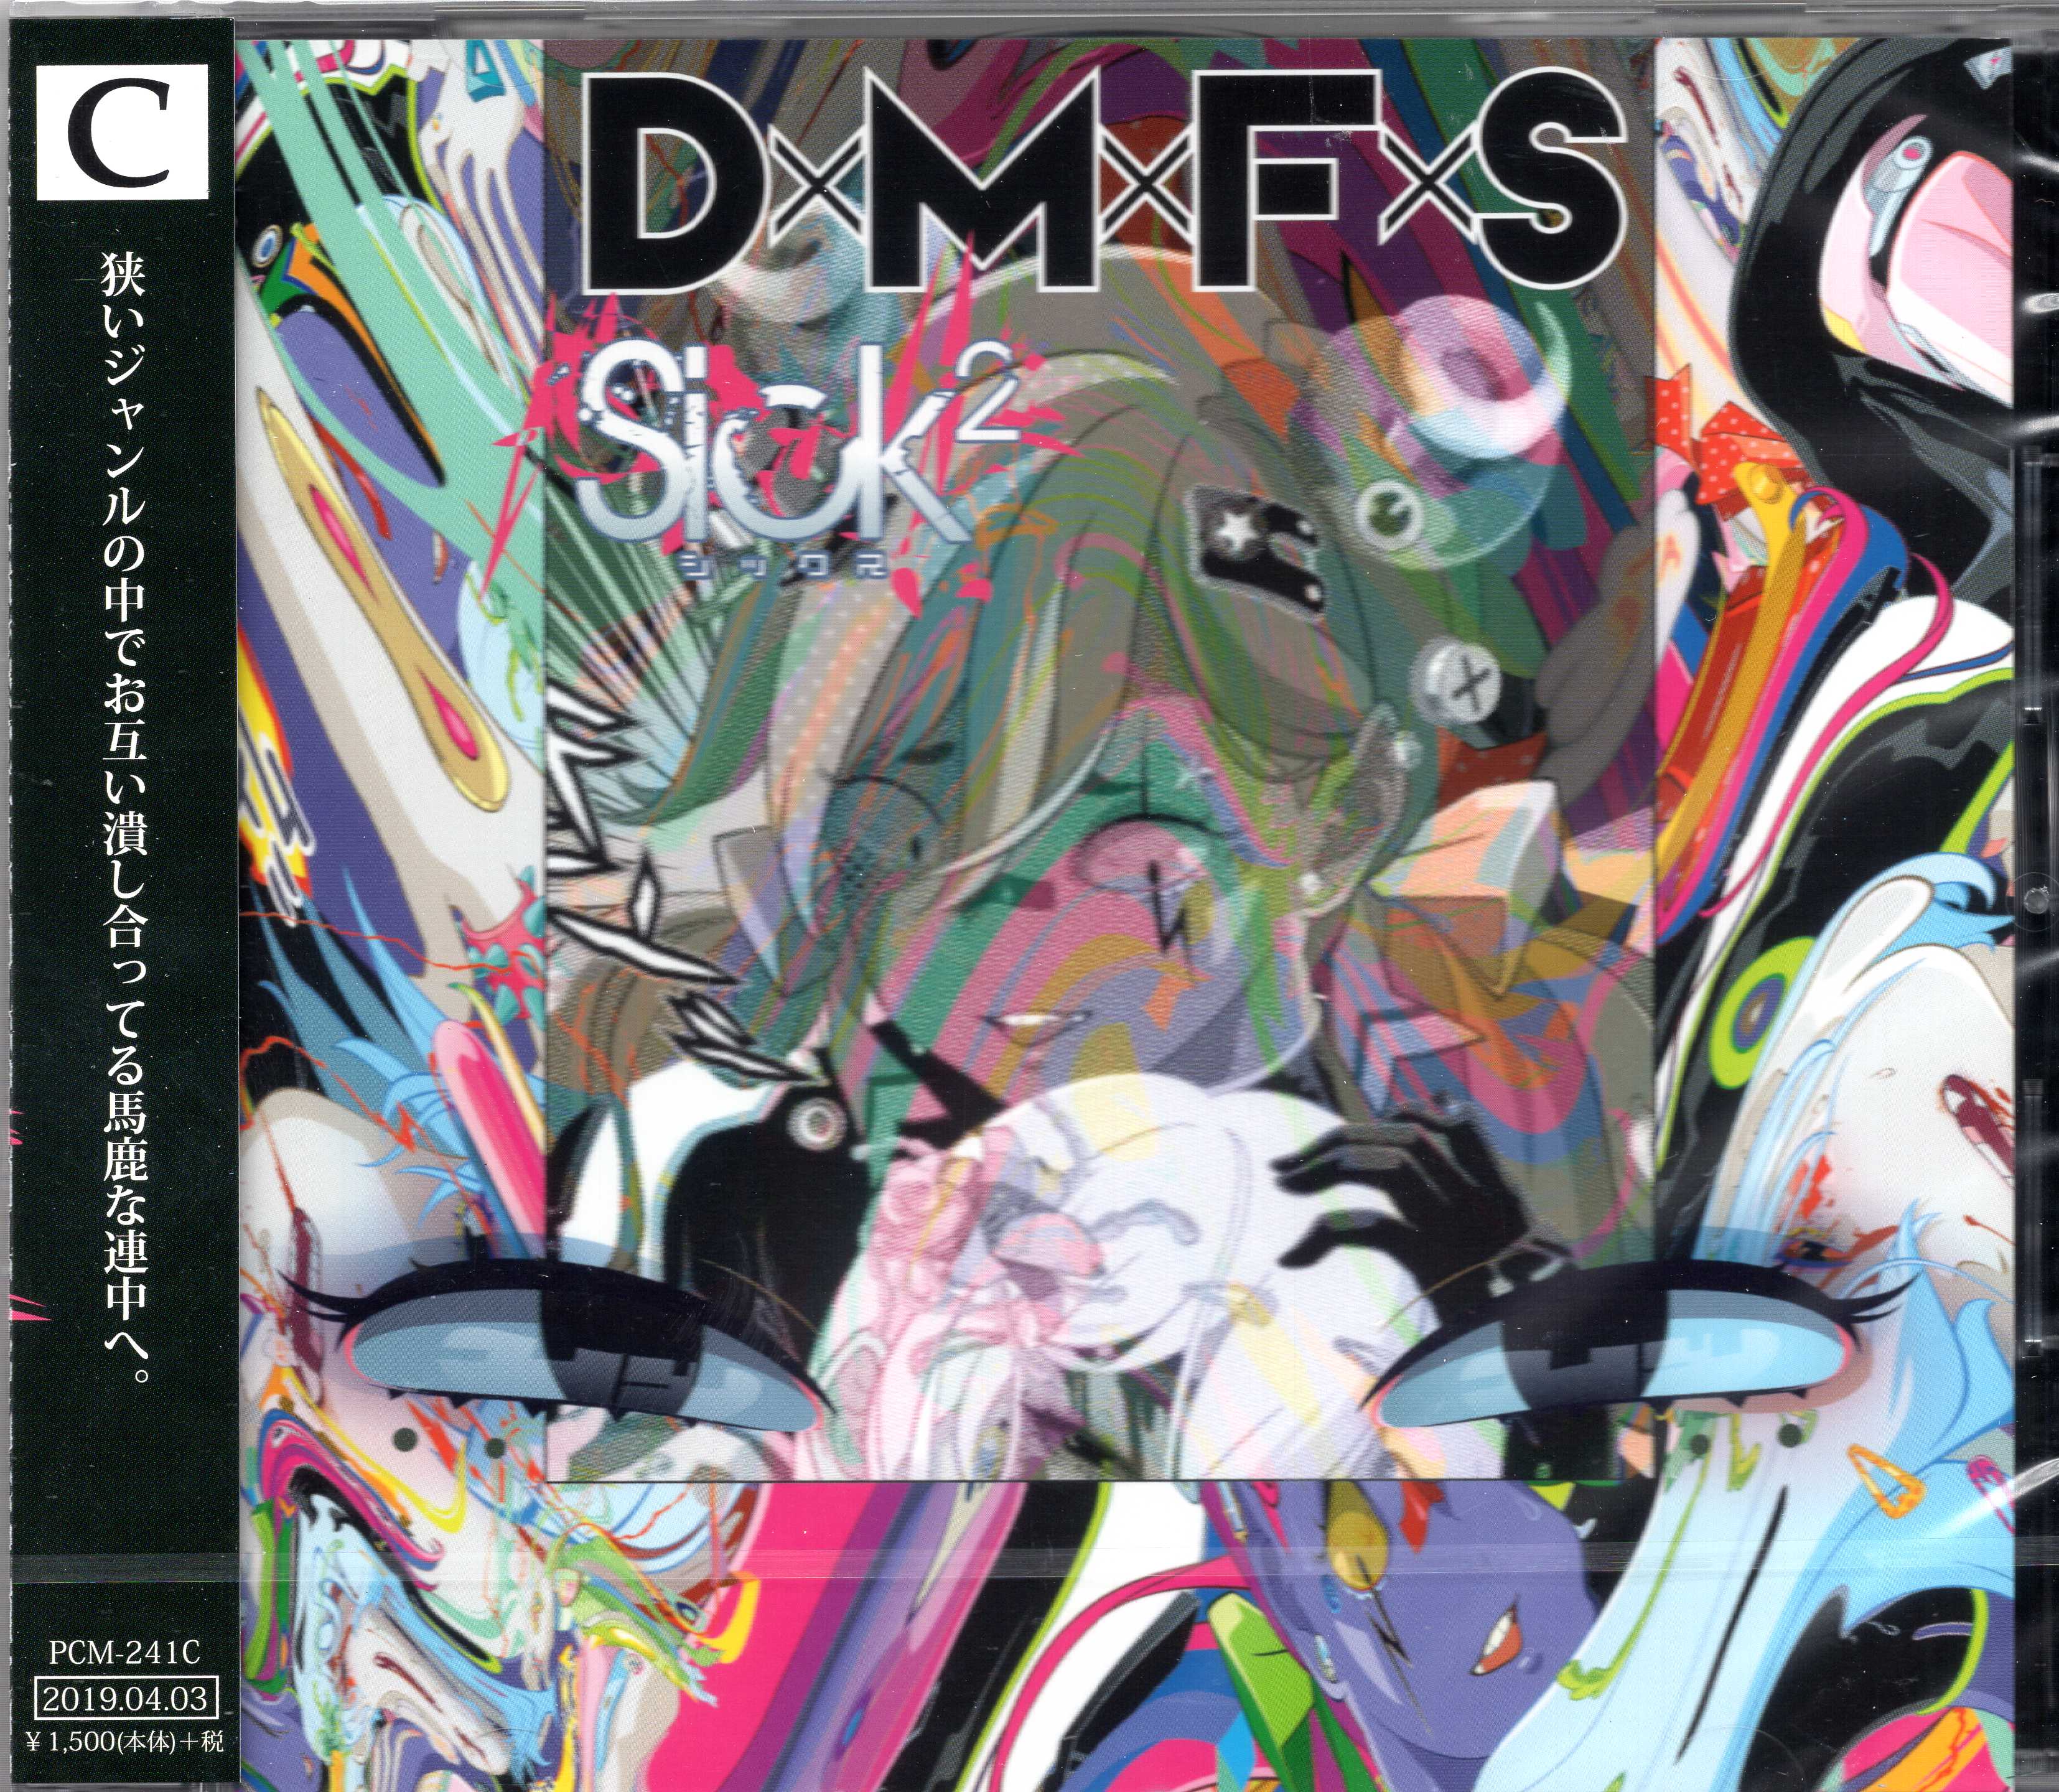 Sick2 ( シックス )  の CD 【Ctype】D×M×F×S